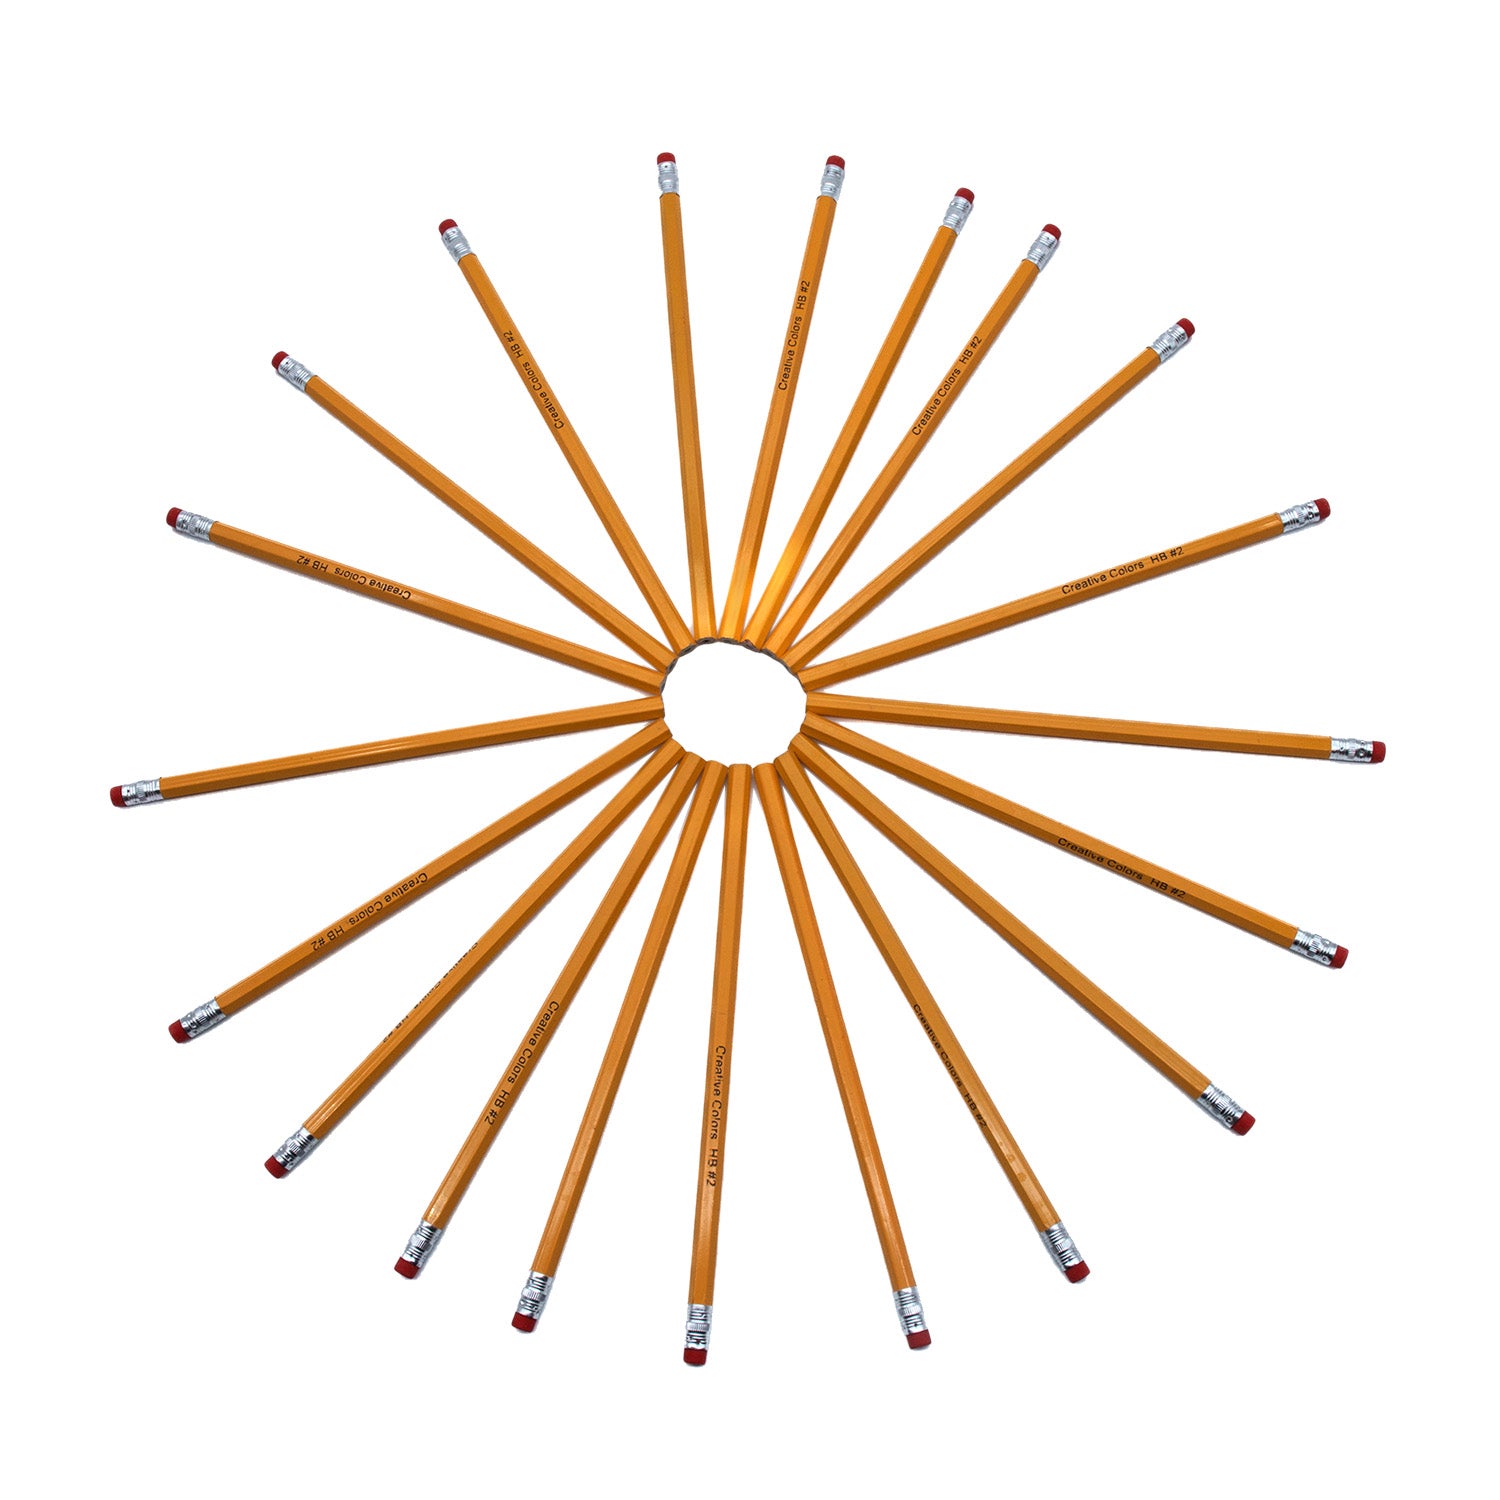 20 Count #2 Pencils - Bulk School Supplies Wholesale Case of 48 Pencils